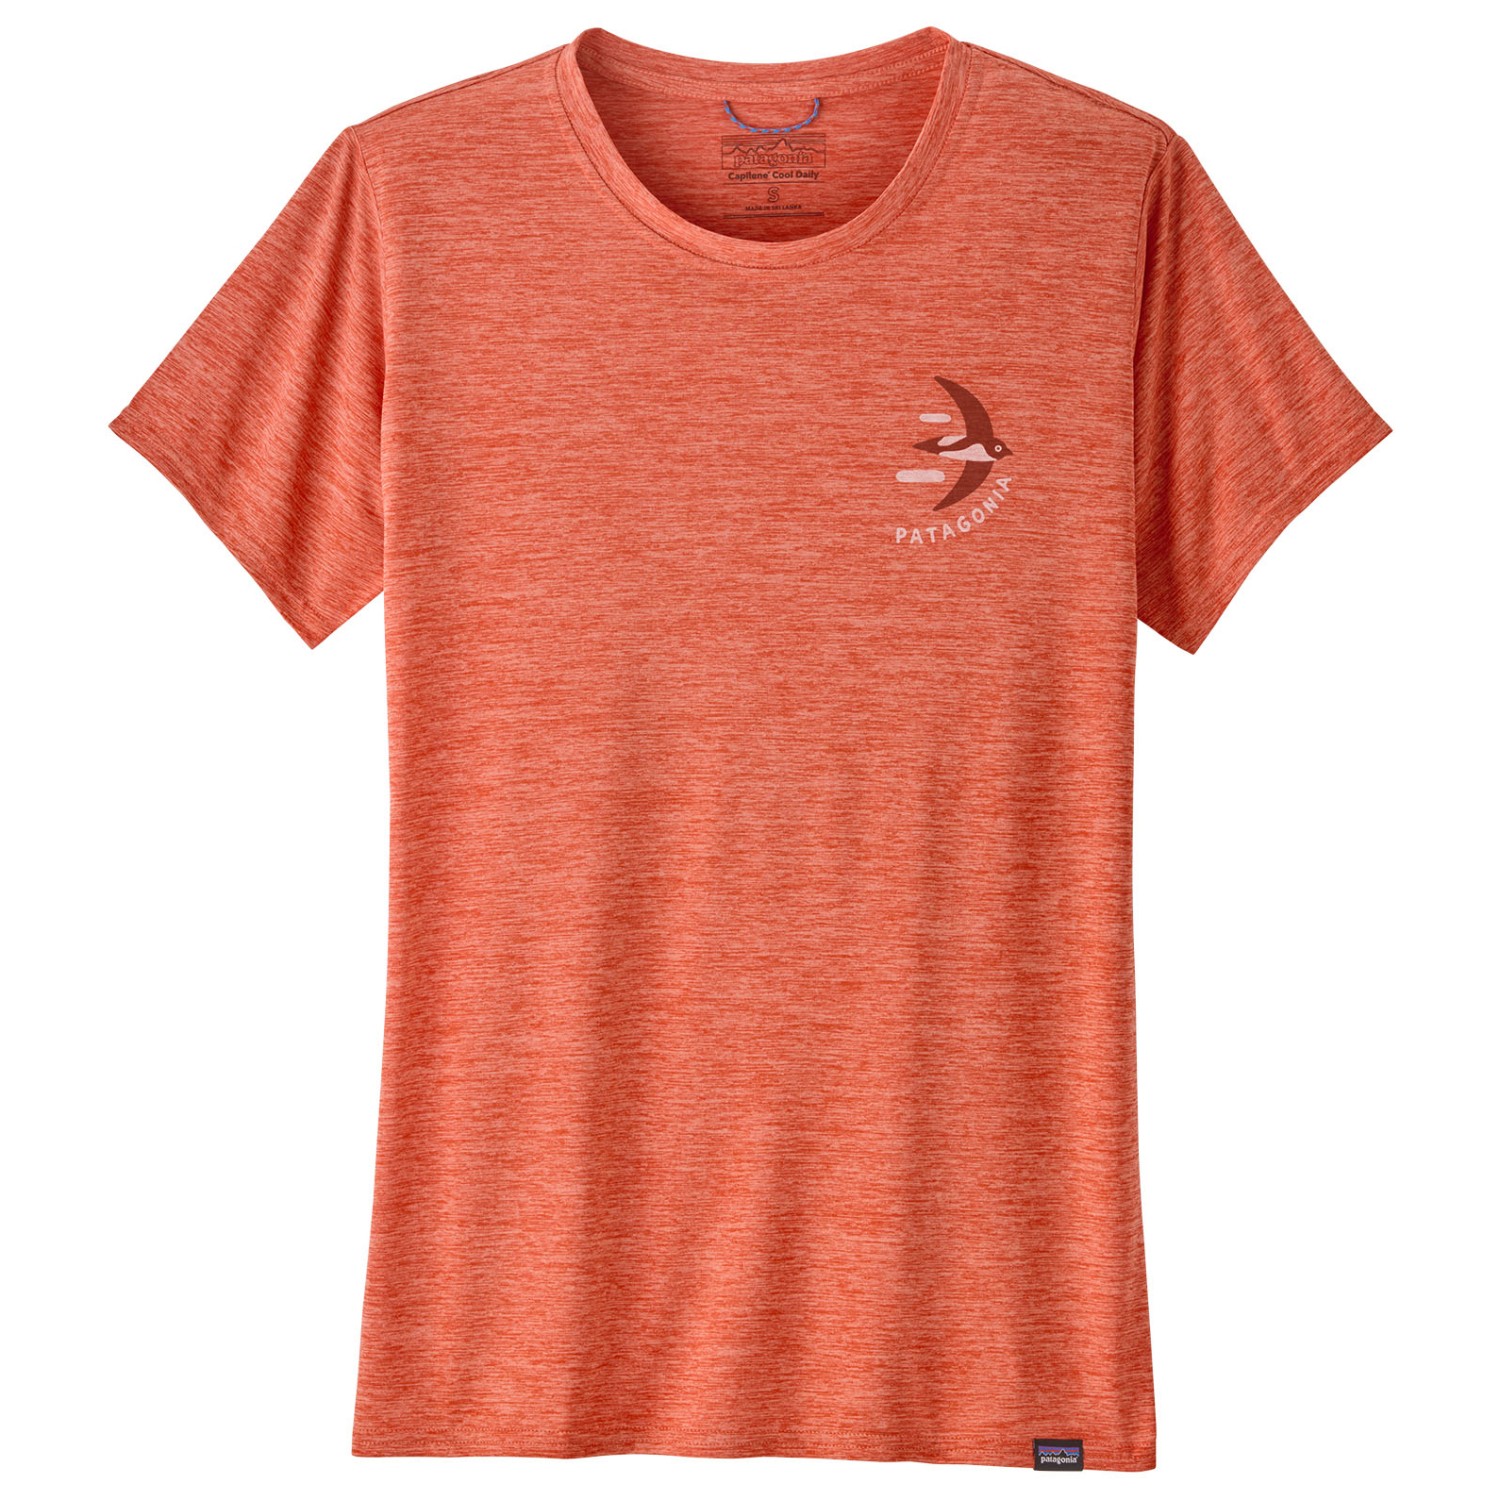 Функциональная рубашка Patagonia Women's Cap Cool Daily Graphic Shirt Lands, цвет Granite Swift/Pimento Red X Dye цена и фото